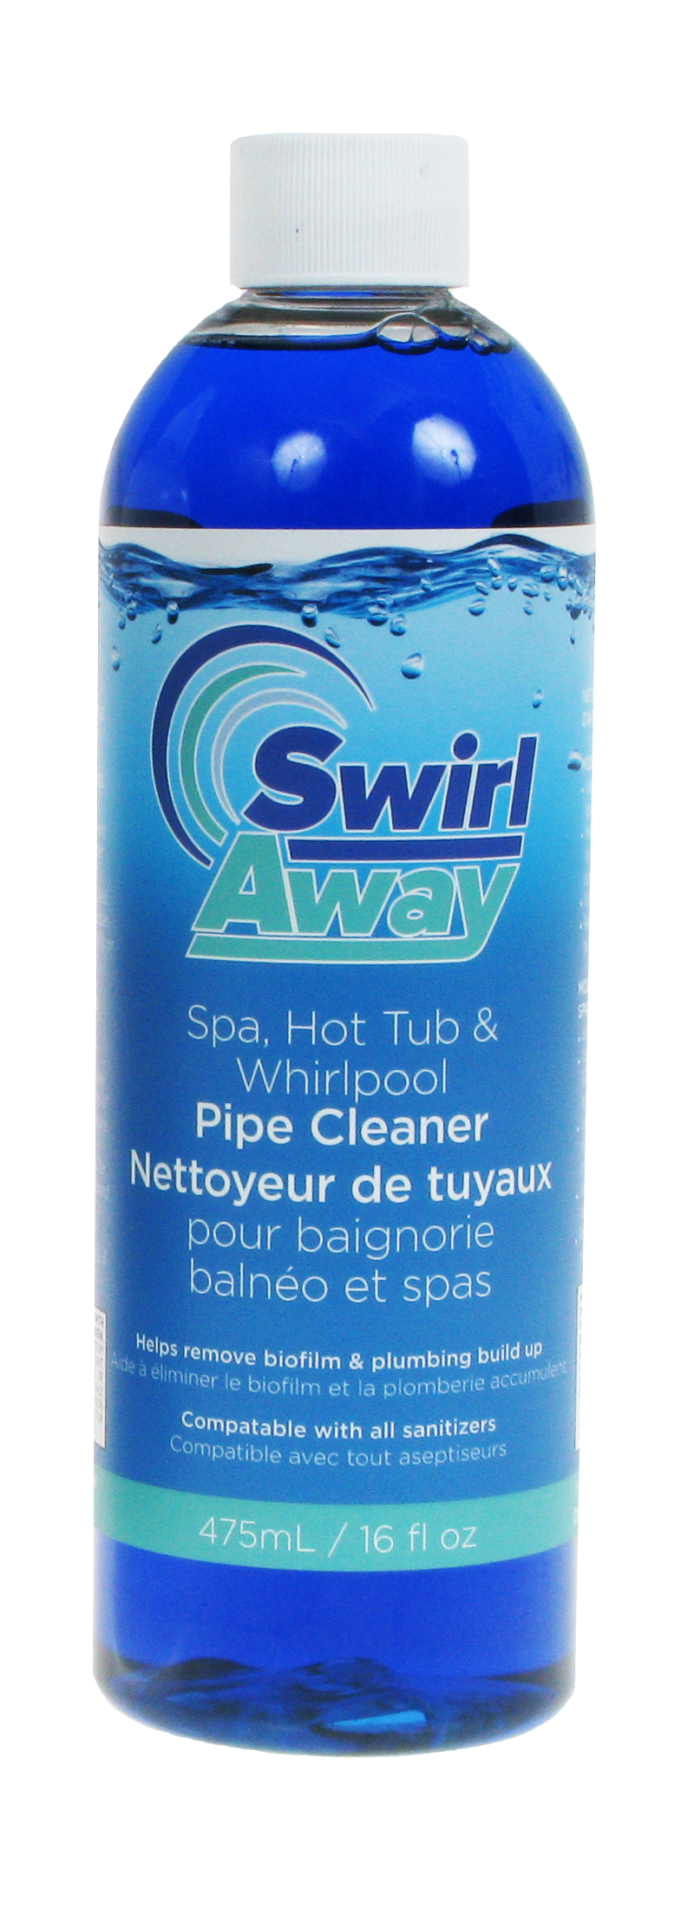 Swirl Away Pipe Cleaner 475ml - Swirl Away Pipe Cleaner 475ml